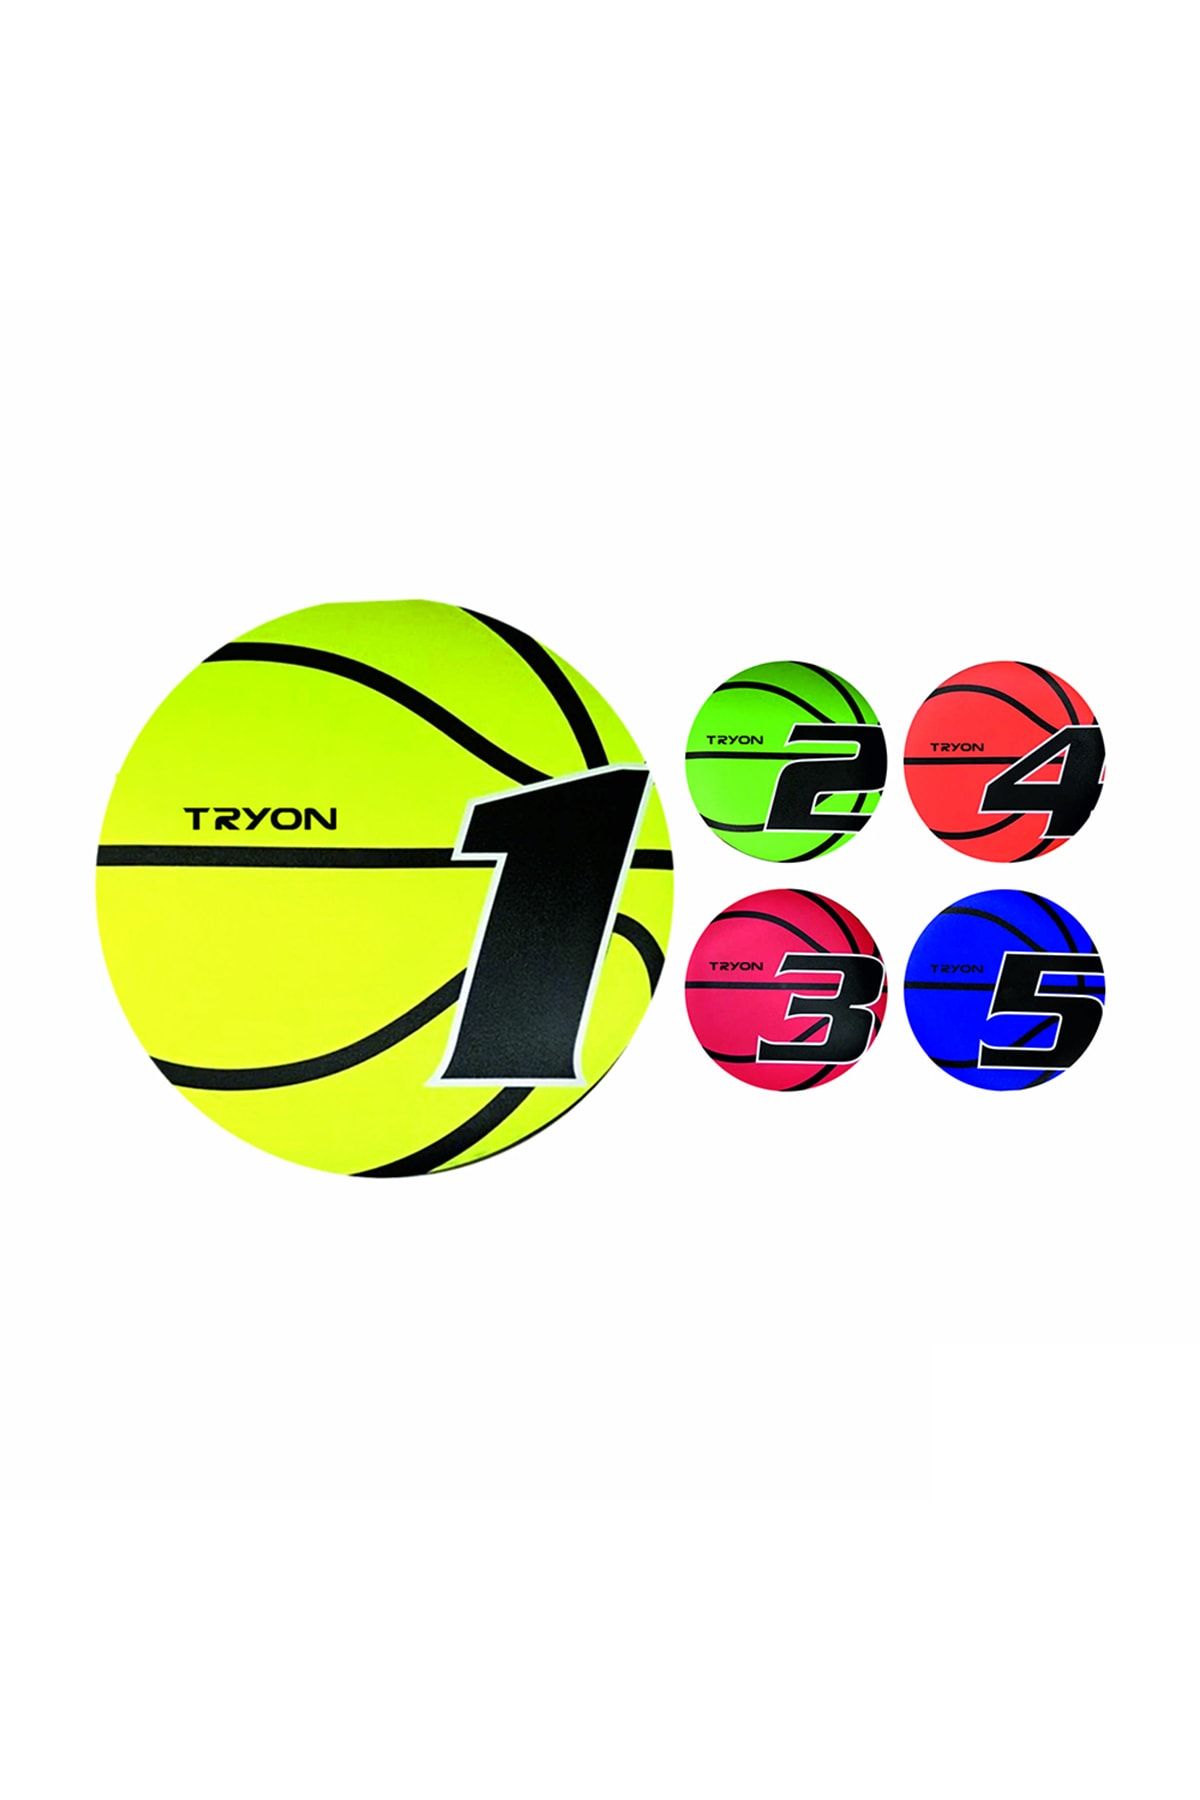 TRYON Tac-500 Basketbol Antrenman Çanağı